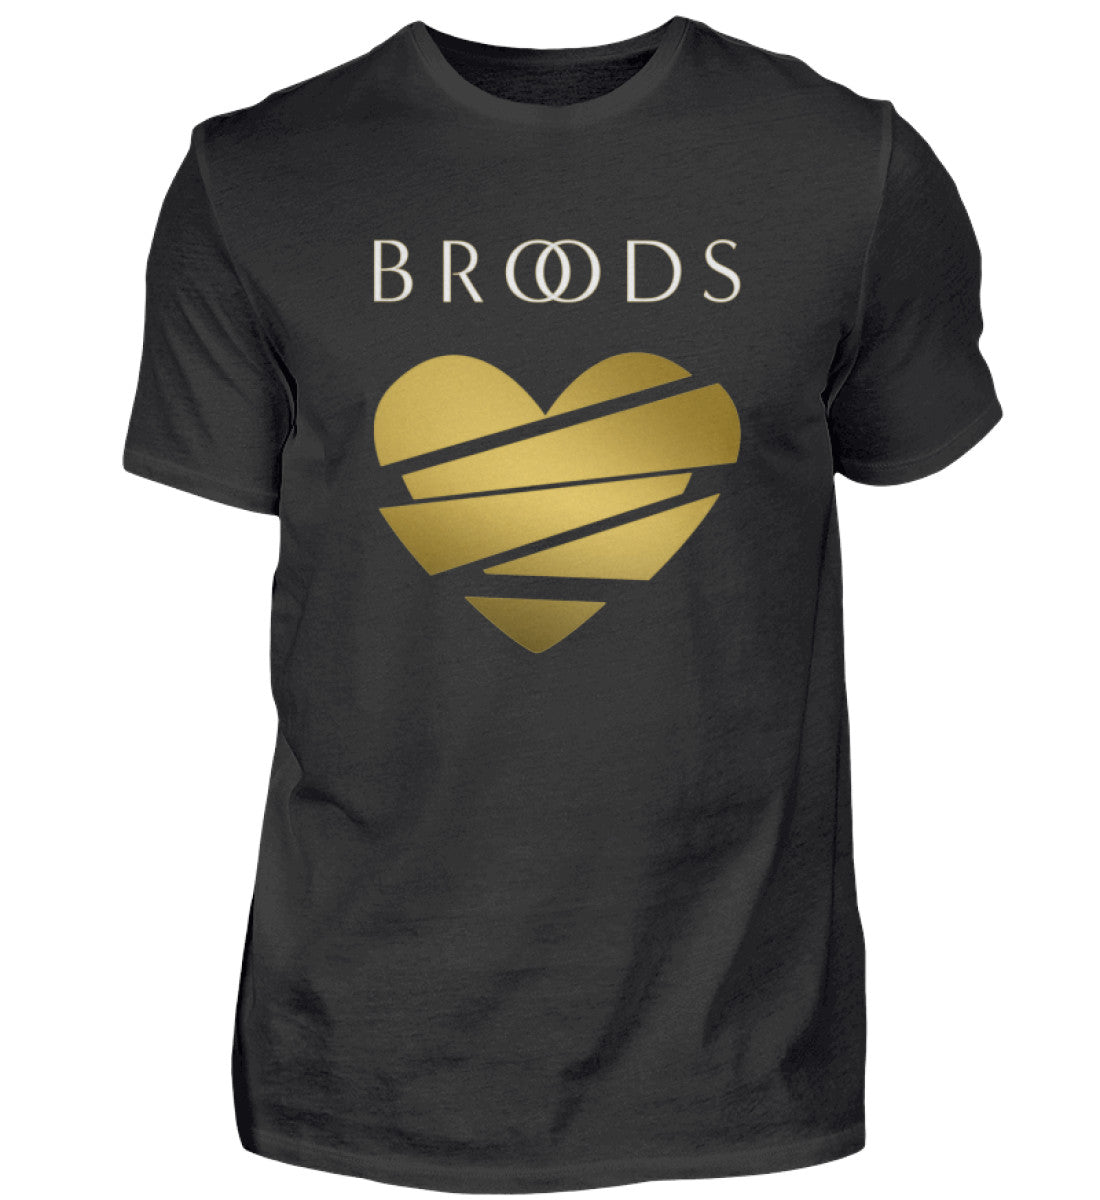 Broods T-Shirt Men